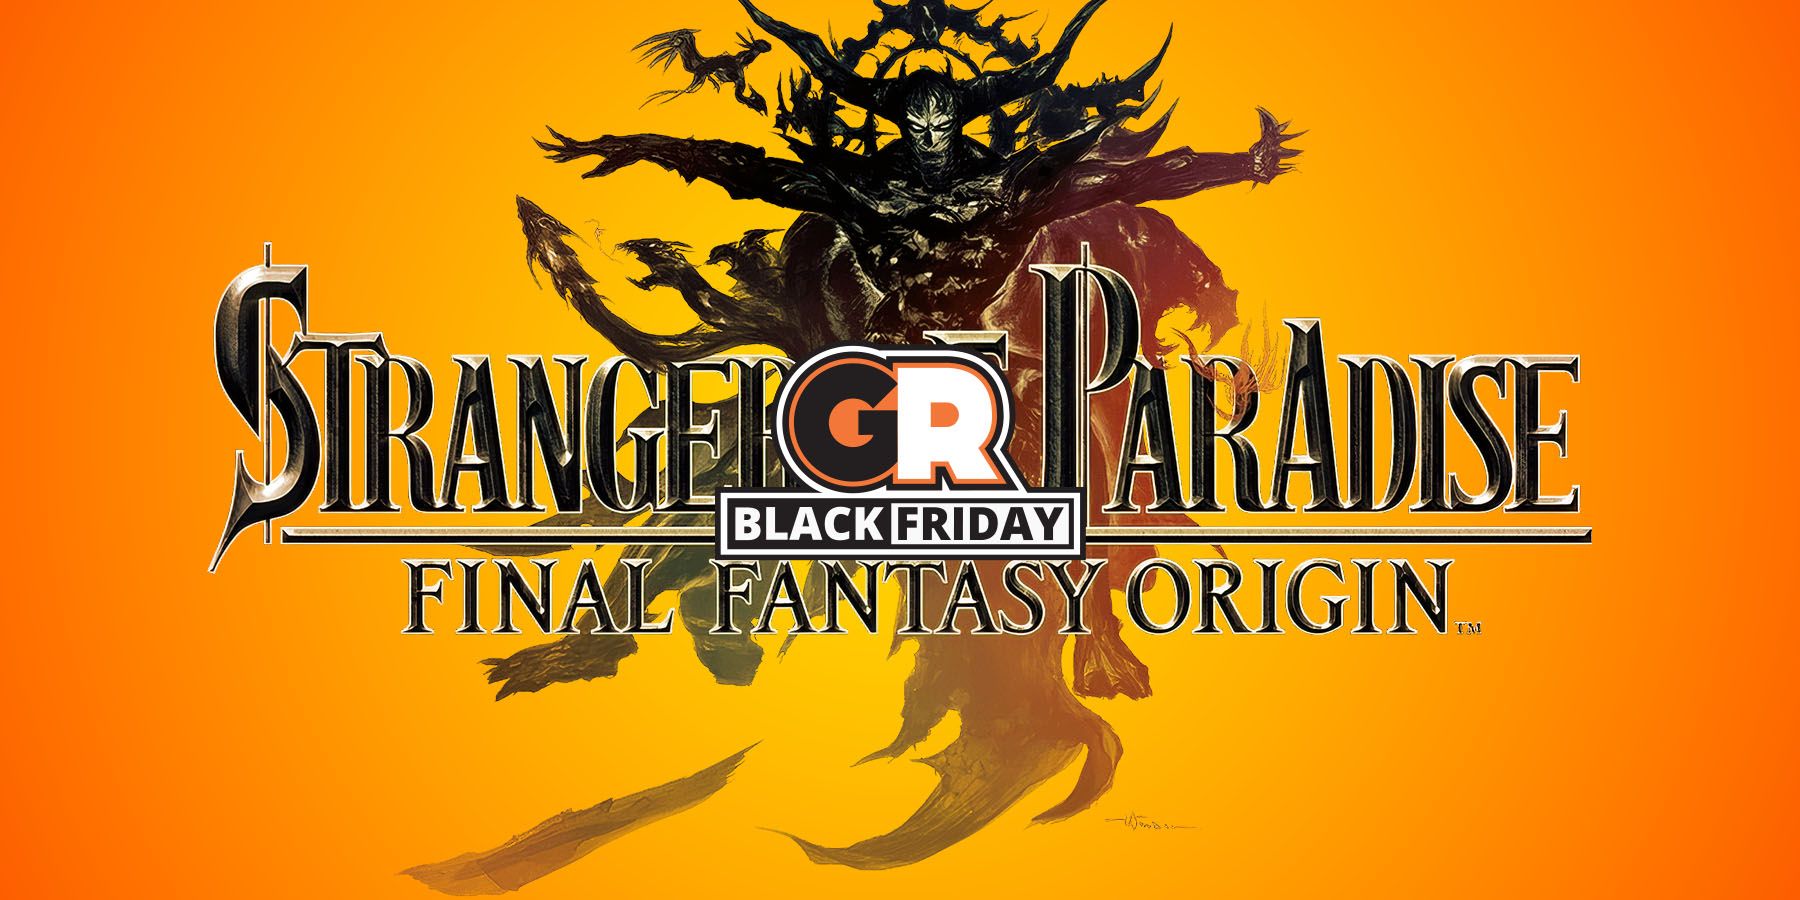 Act Fast: This Huge Stranger of Paradise Final Fantasy Origin Black Friday Deal Will NOT Last